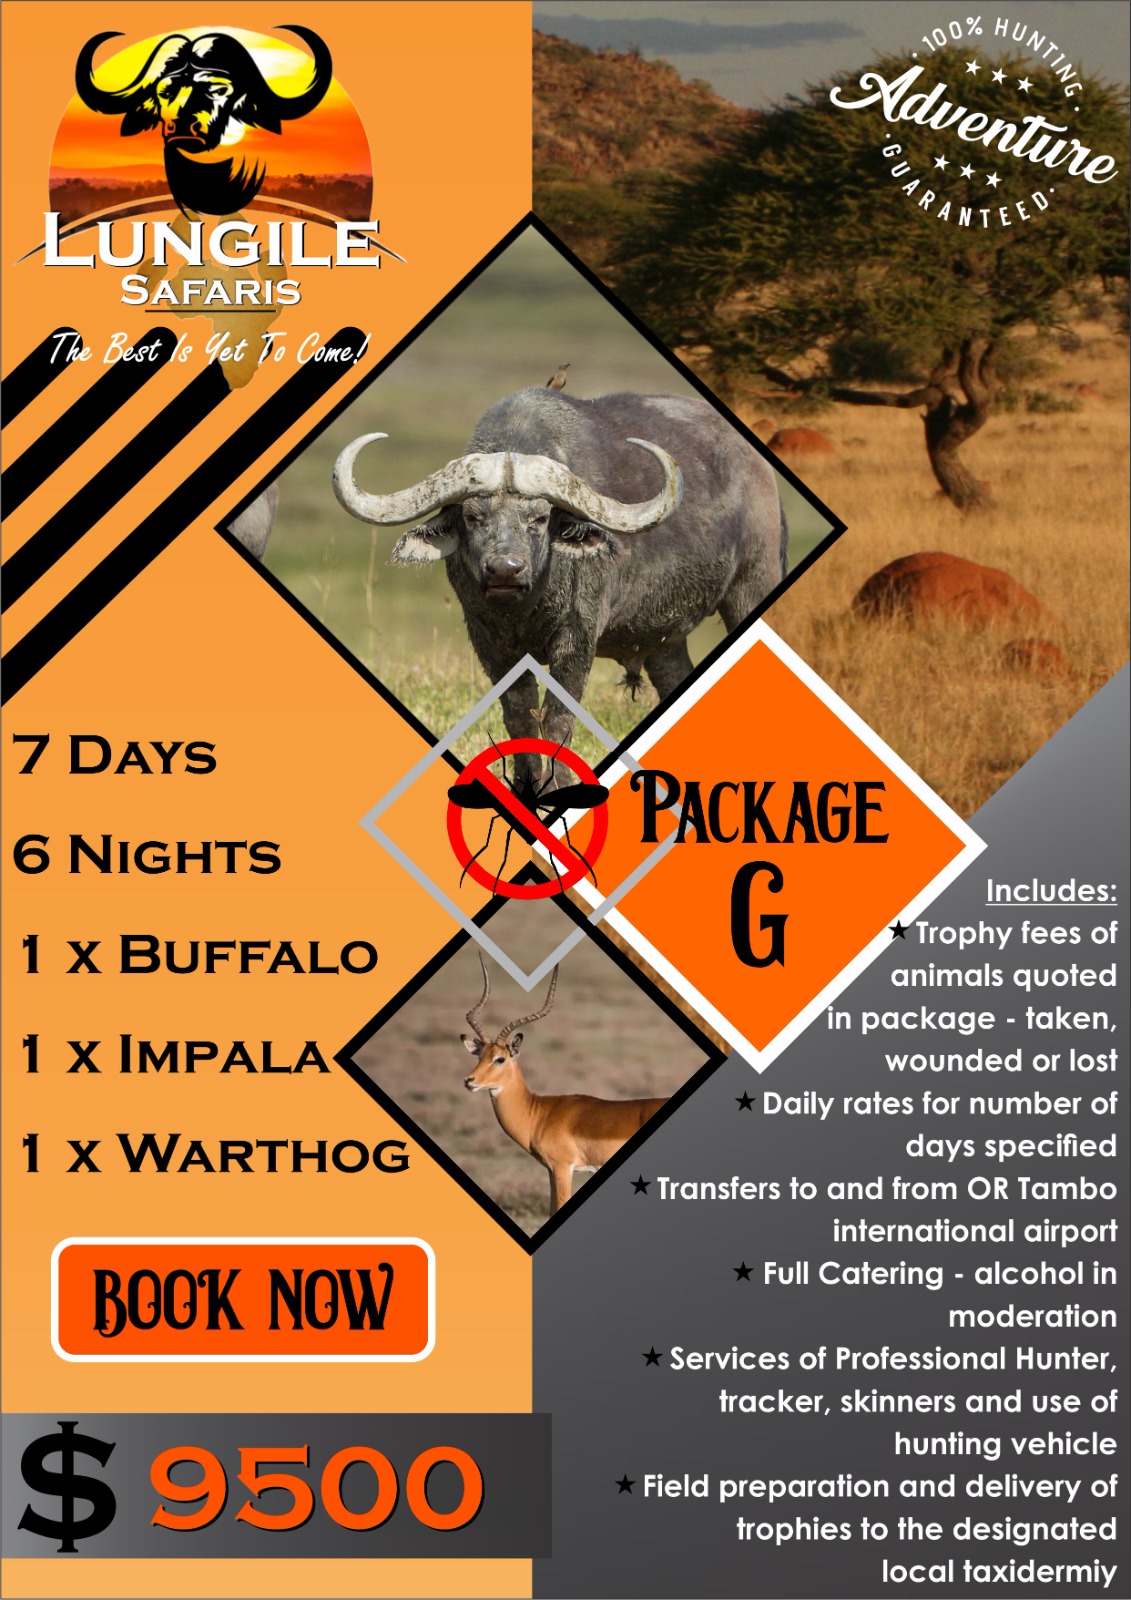 Lungile Safaris Package G